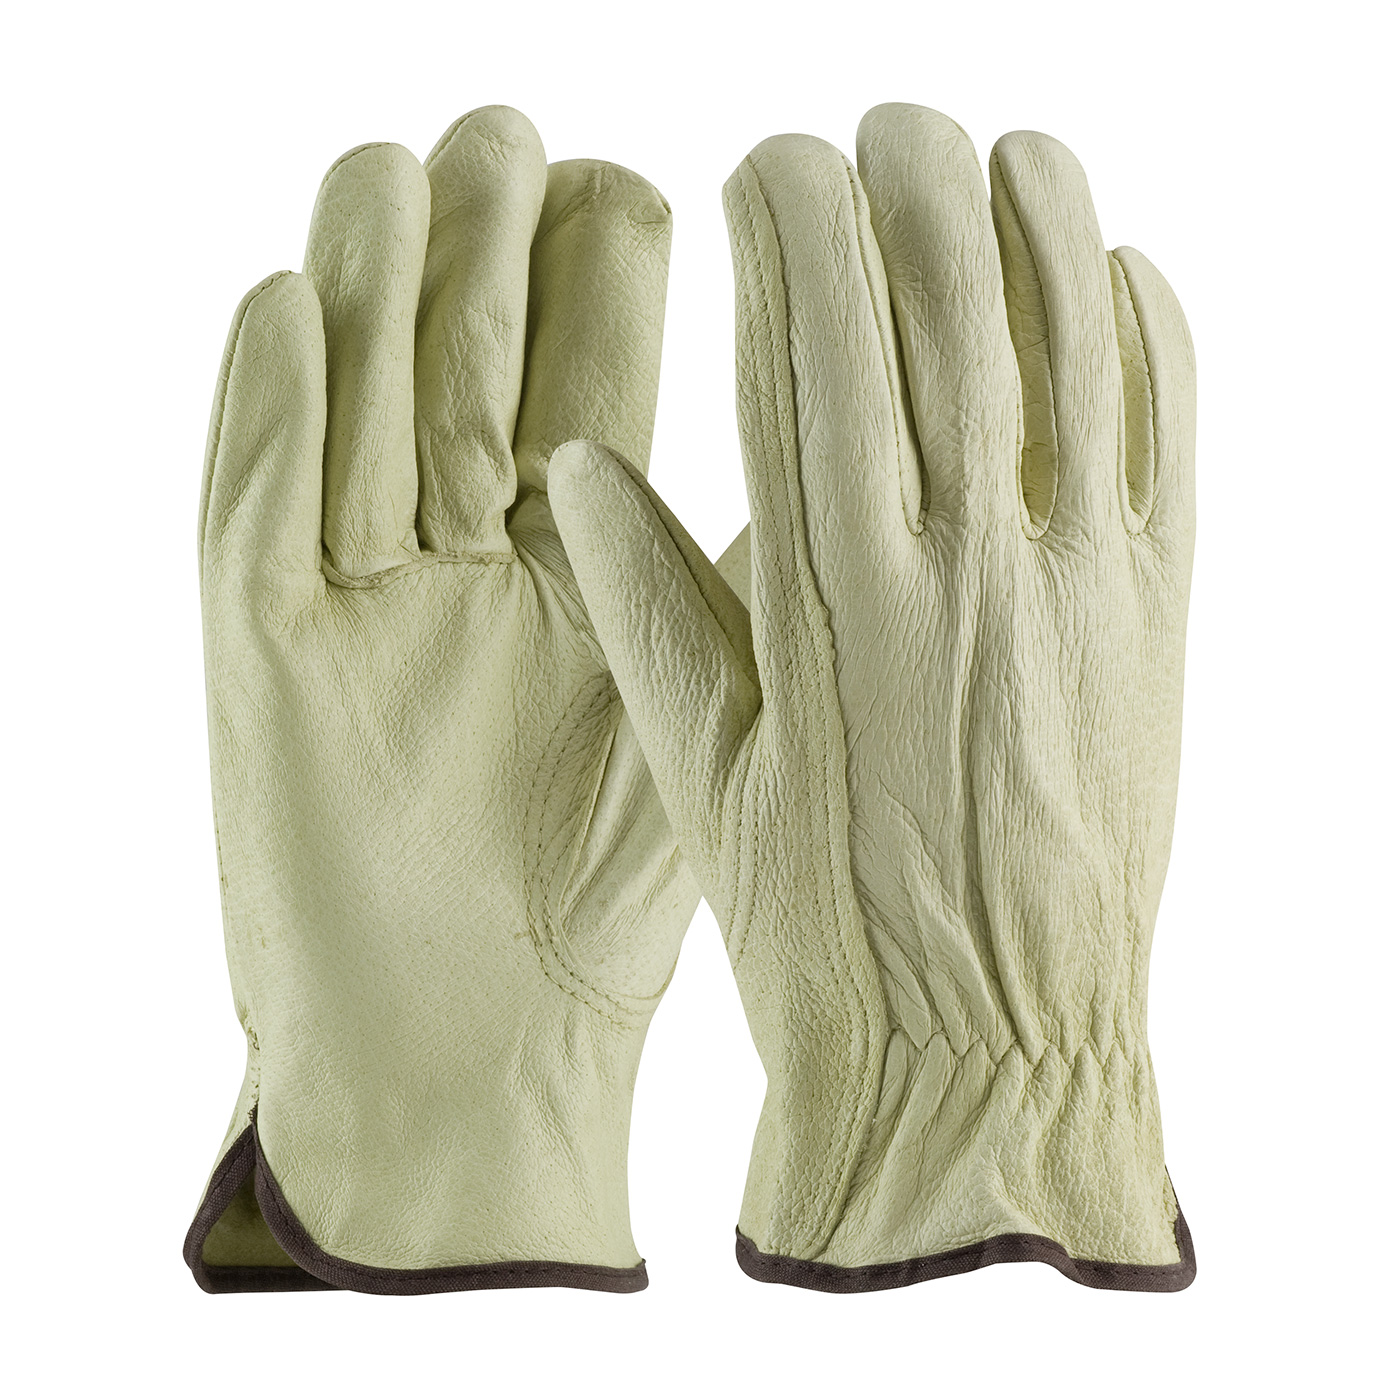 PIP 70-360/M Industry Grade Top Grain Pigskin Leather Drivers Glove - Keystone Thumb - Medium PID-70-360 M